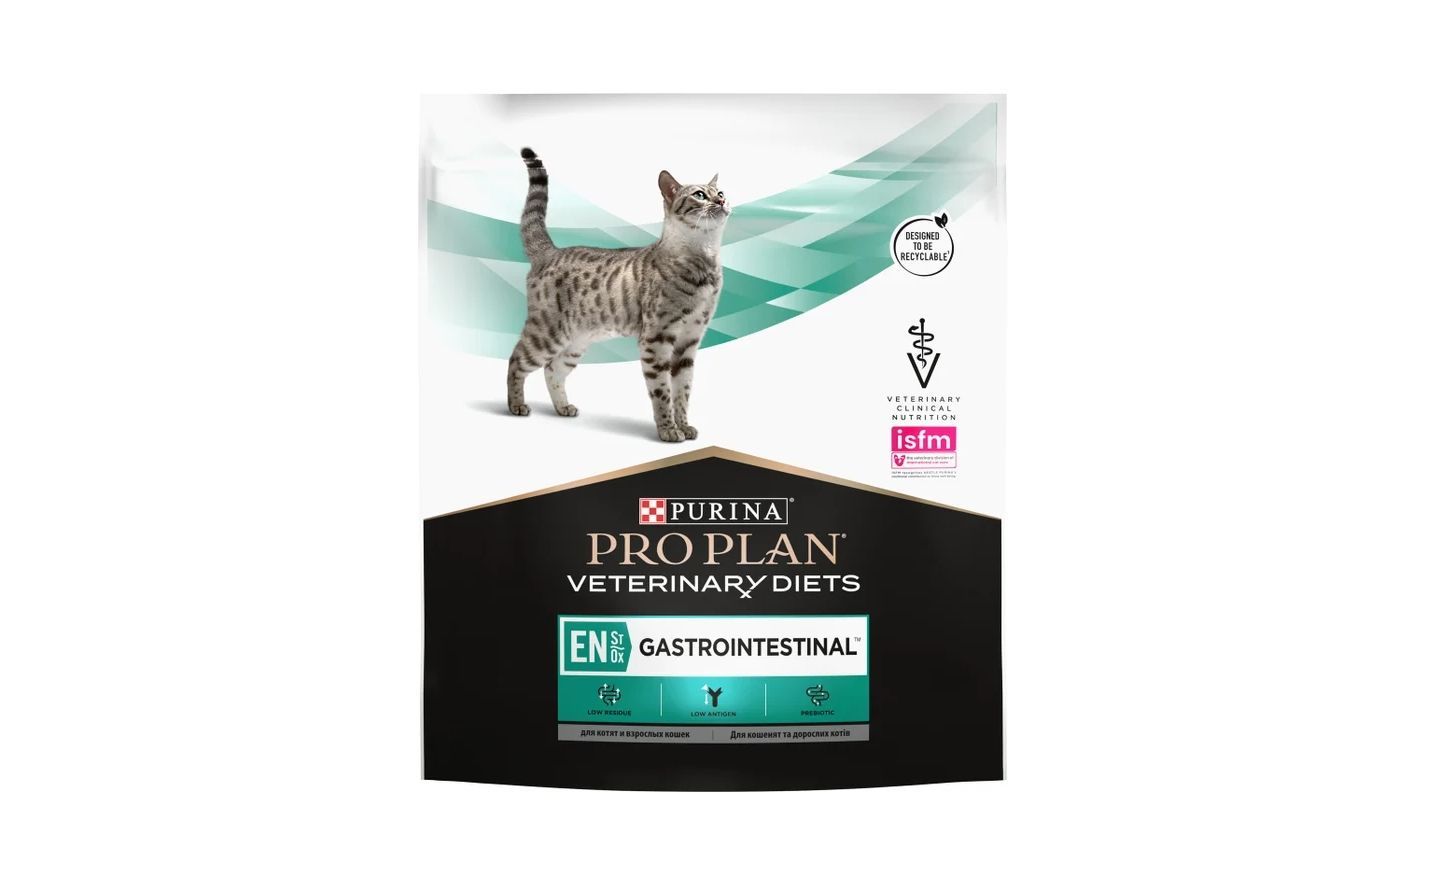 Сухой корм для кошек Pro Plan Veterinary Diets ha Hypoallergenic, гипоаллергенный, 1,3кг. Корм Проплан гастро Интестинал для кошек. Pro Plan® Veterinary Diets en St/Ox Gastrointestinal. Purina Gastrointestinal для кошек. Pro plan en gastrointestinal для кошек